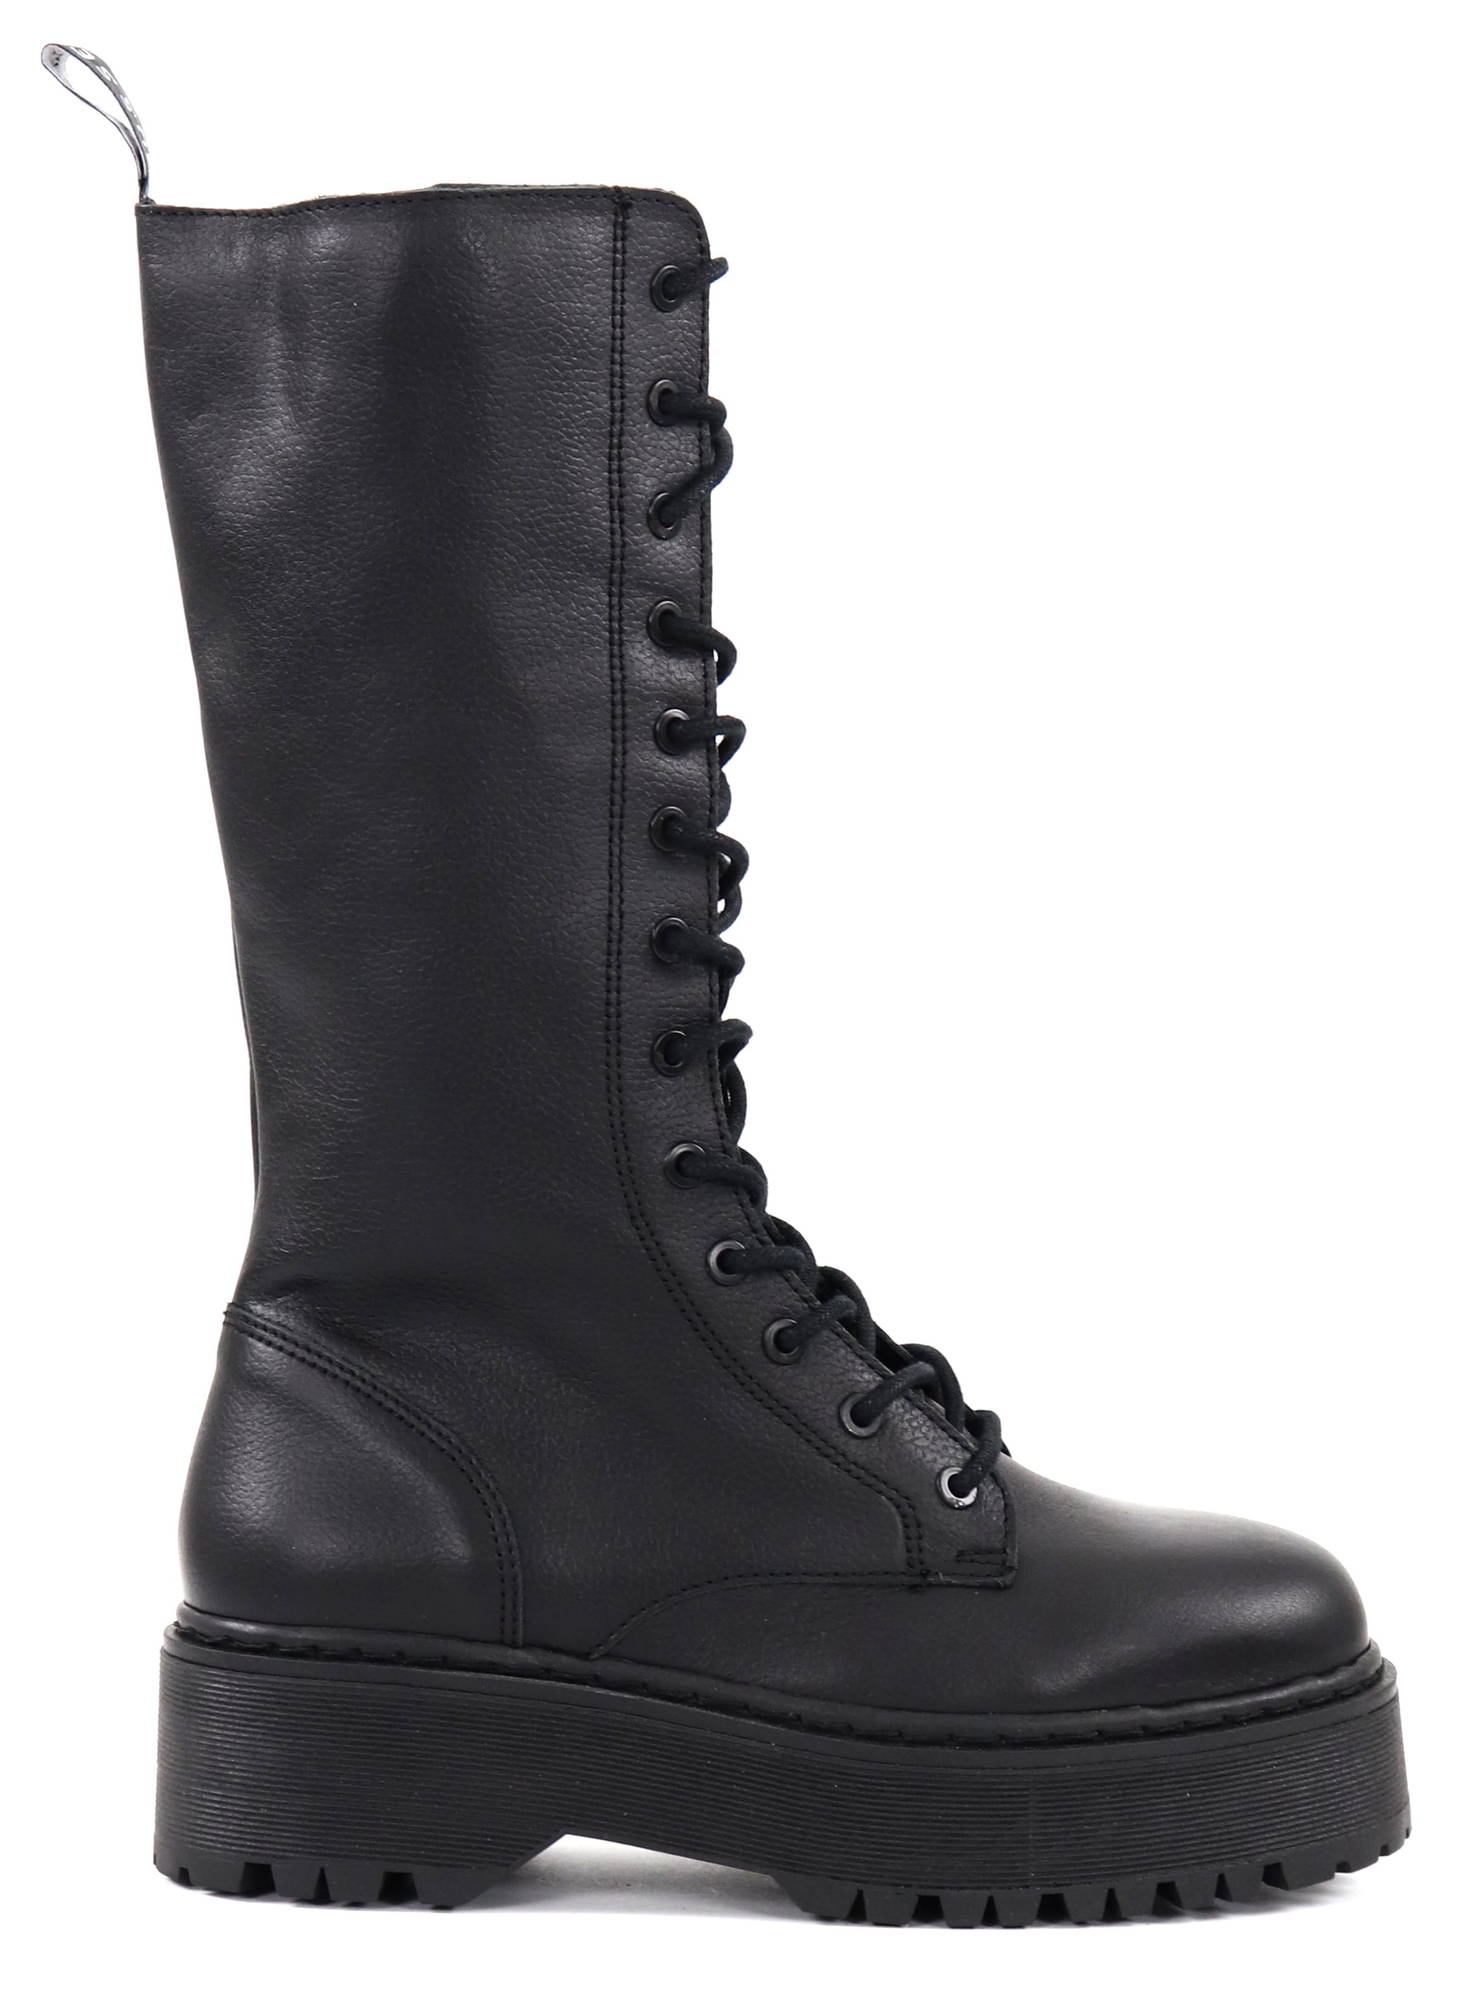 Musse&Cloud Boots Token, black - Stilettoshop.eu webstore